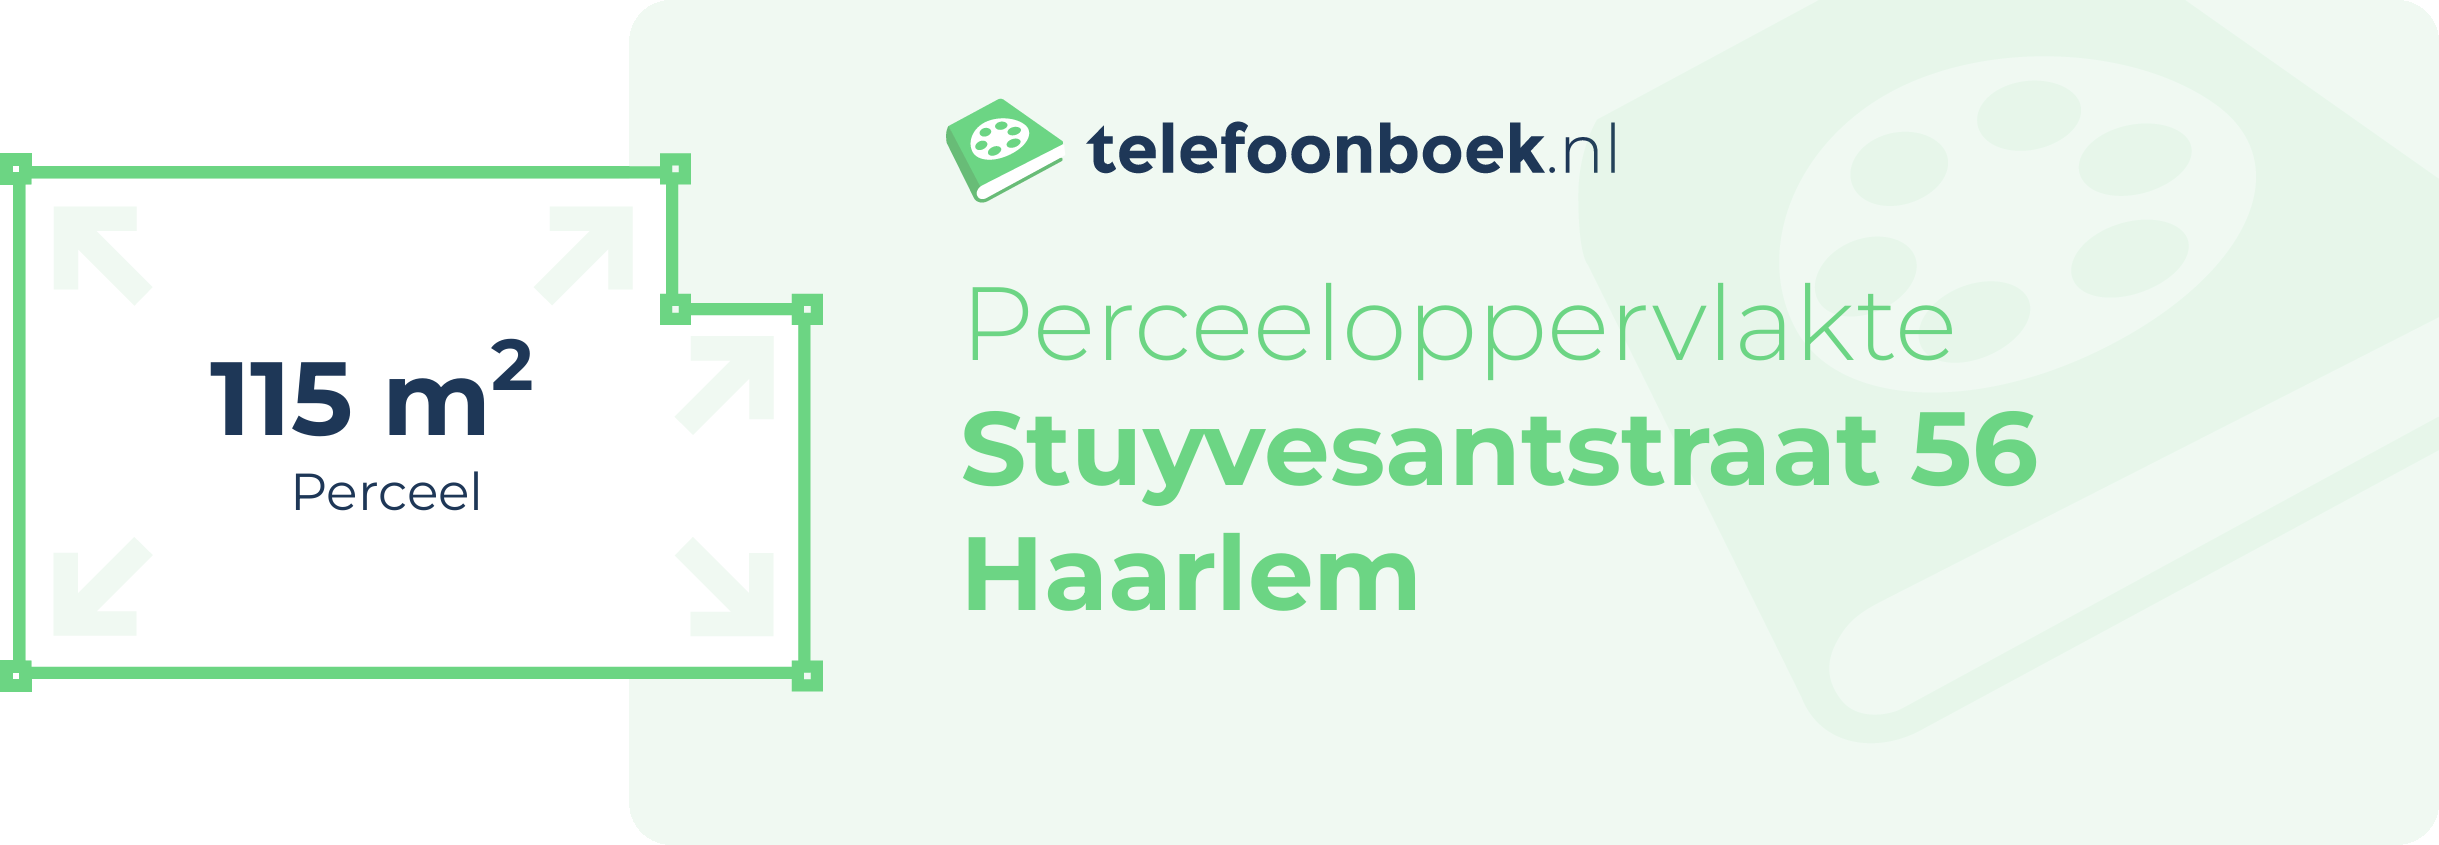 Perceeloppervlakte Stuyvesantstraat 56 Haarlem